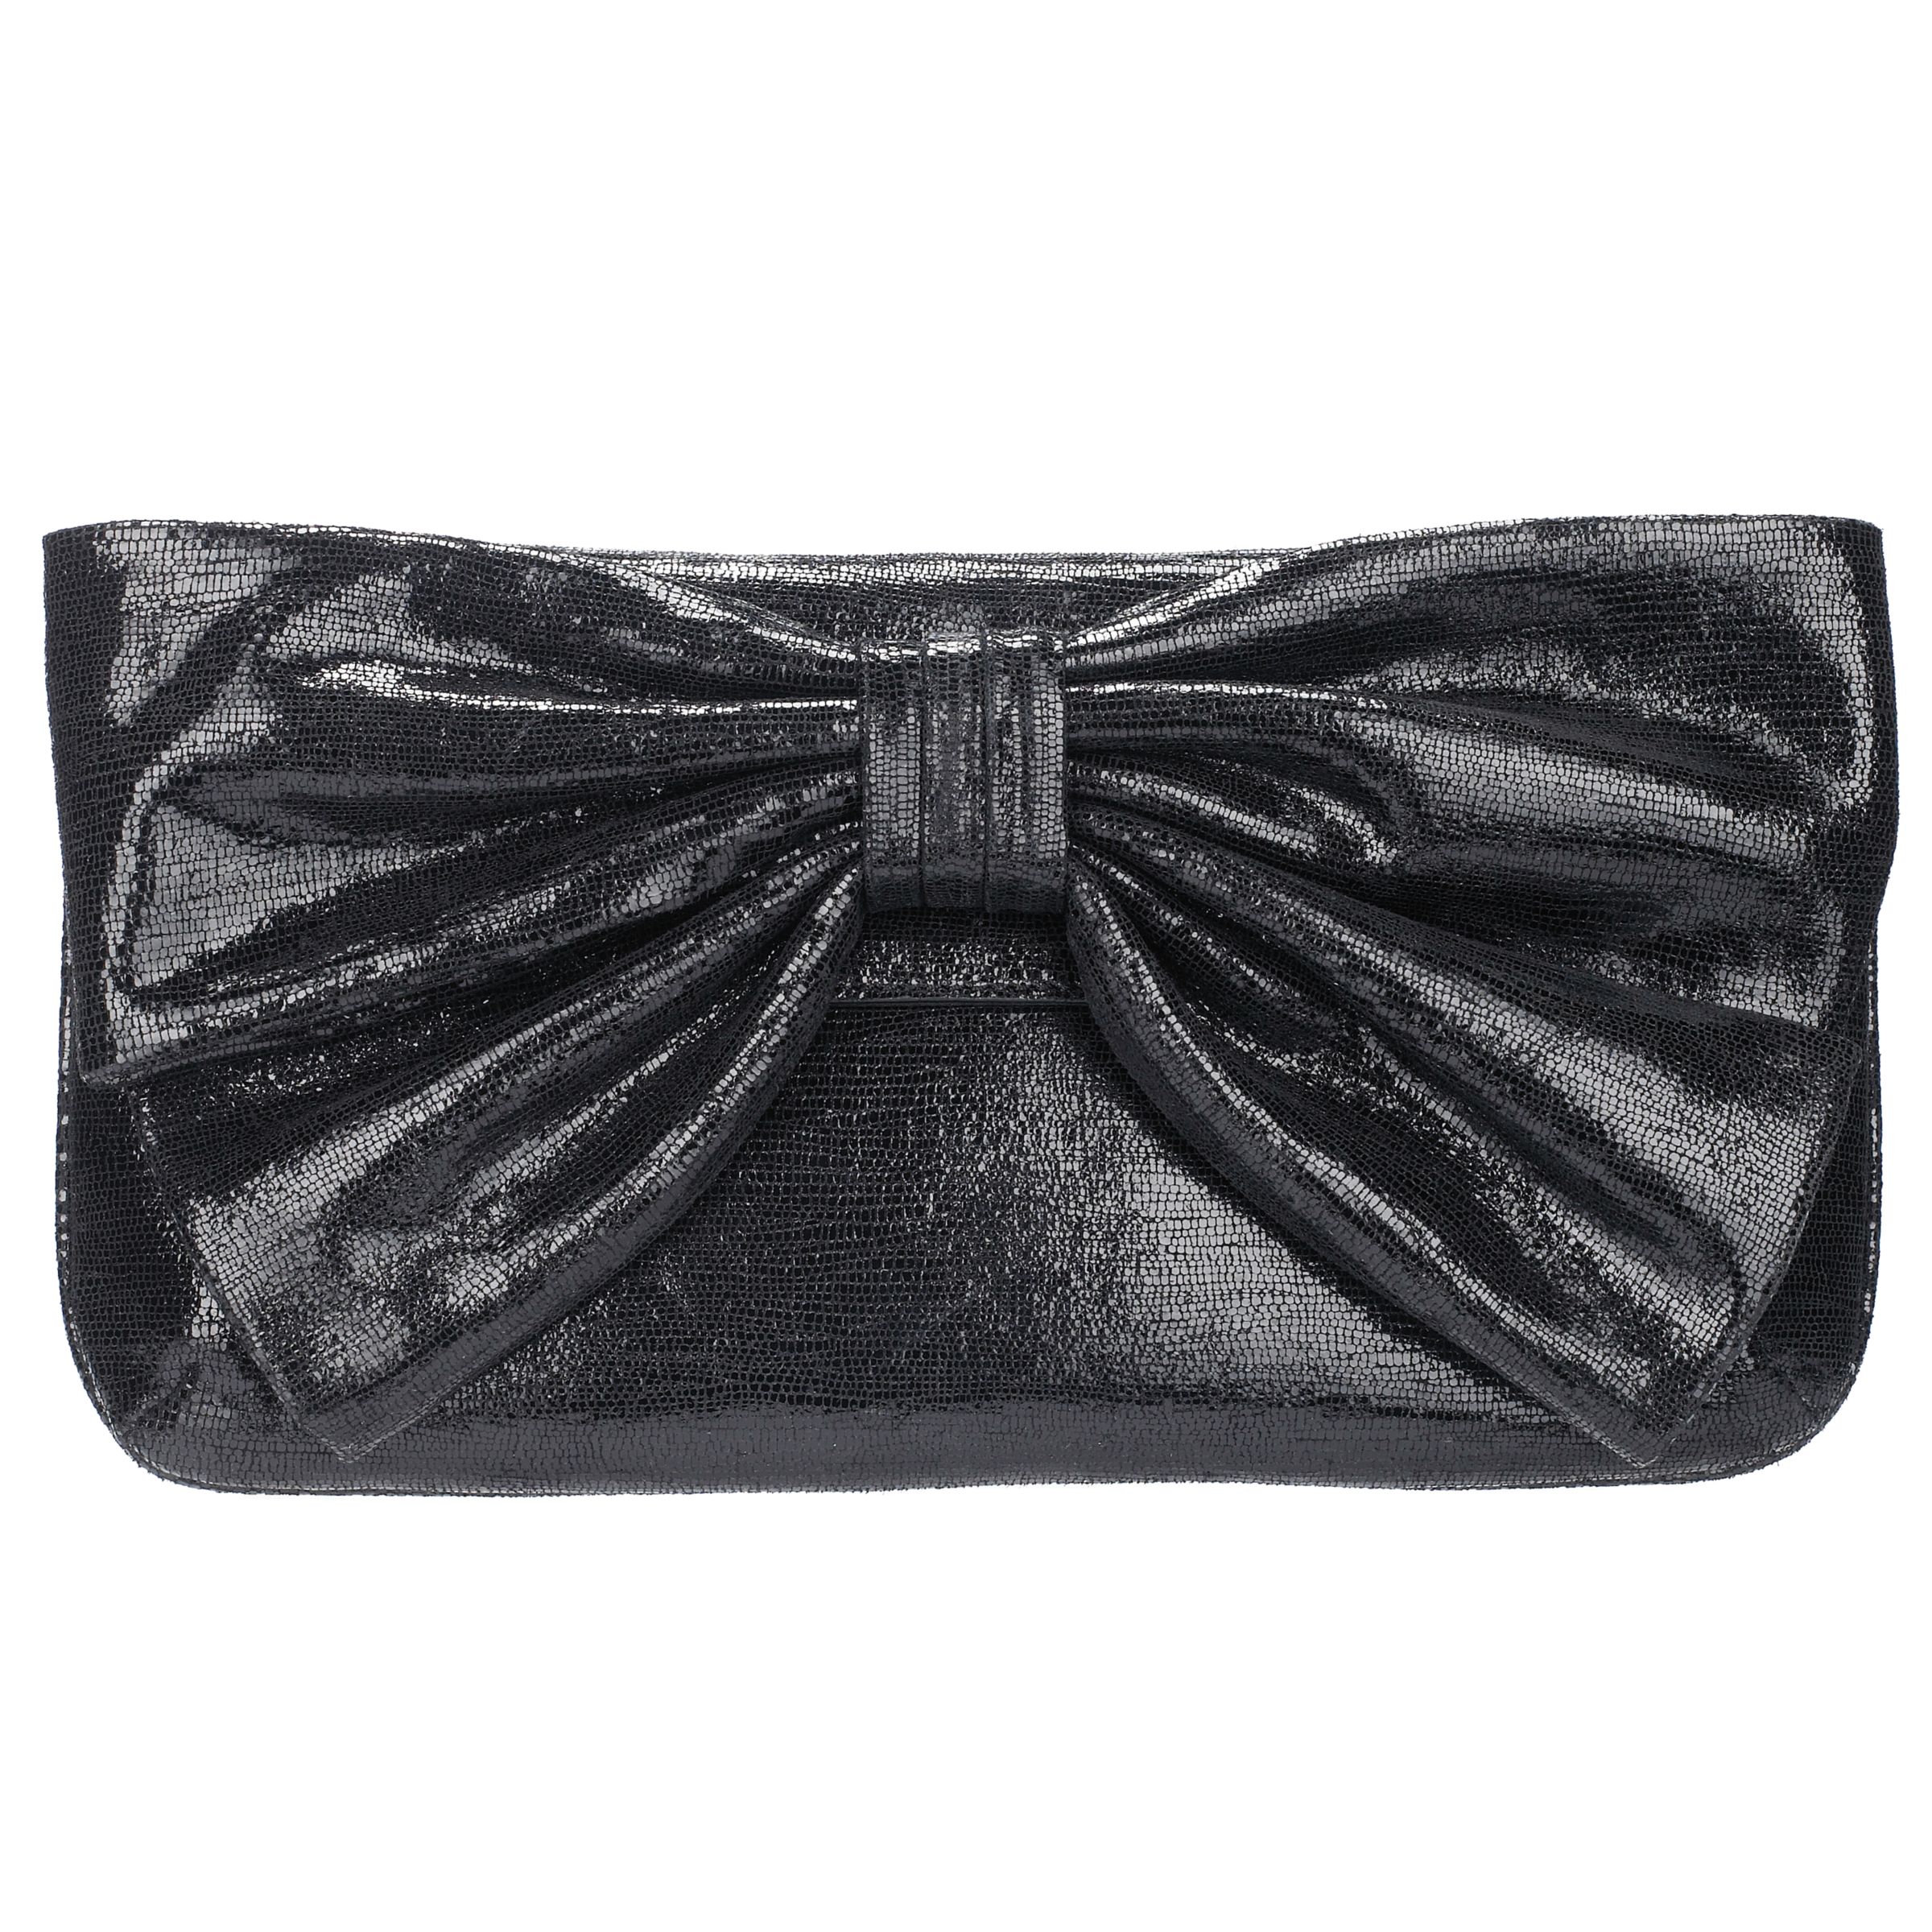 Lulu Guinness Medium Leona Bow Sparkle Clutch Handbag, Black at John Lewis